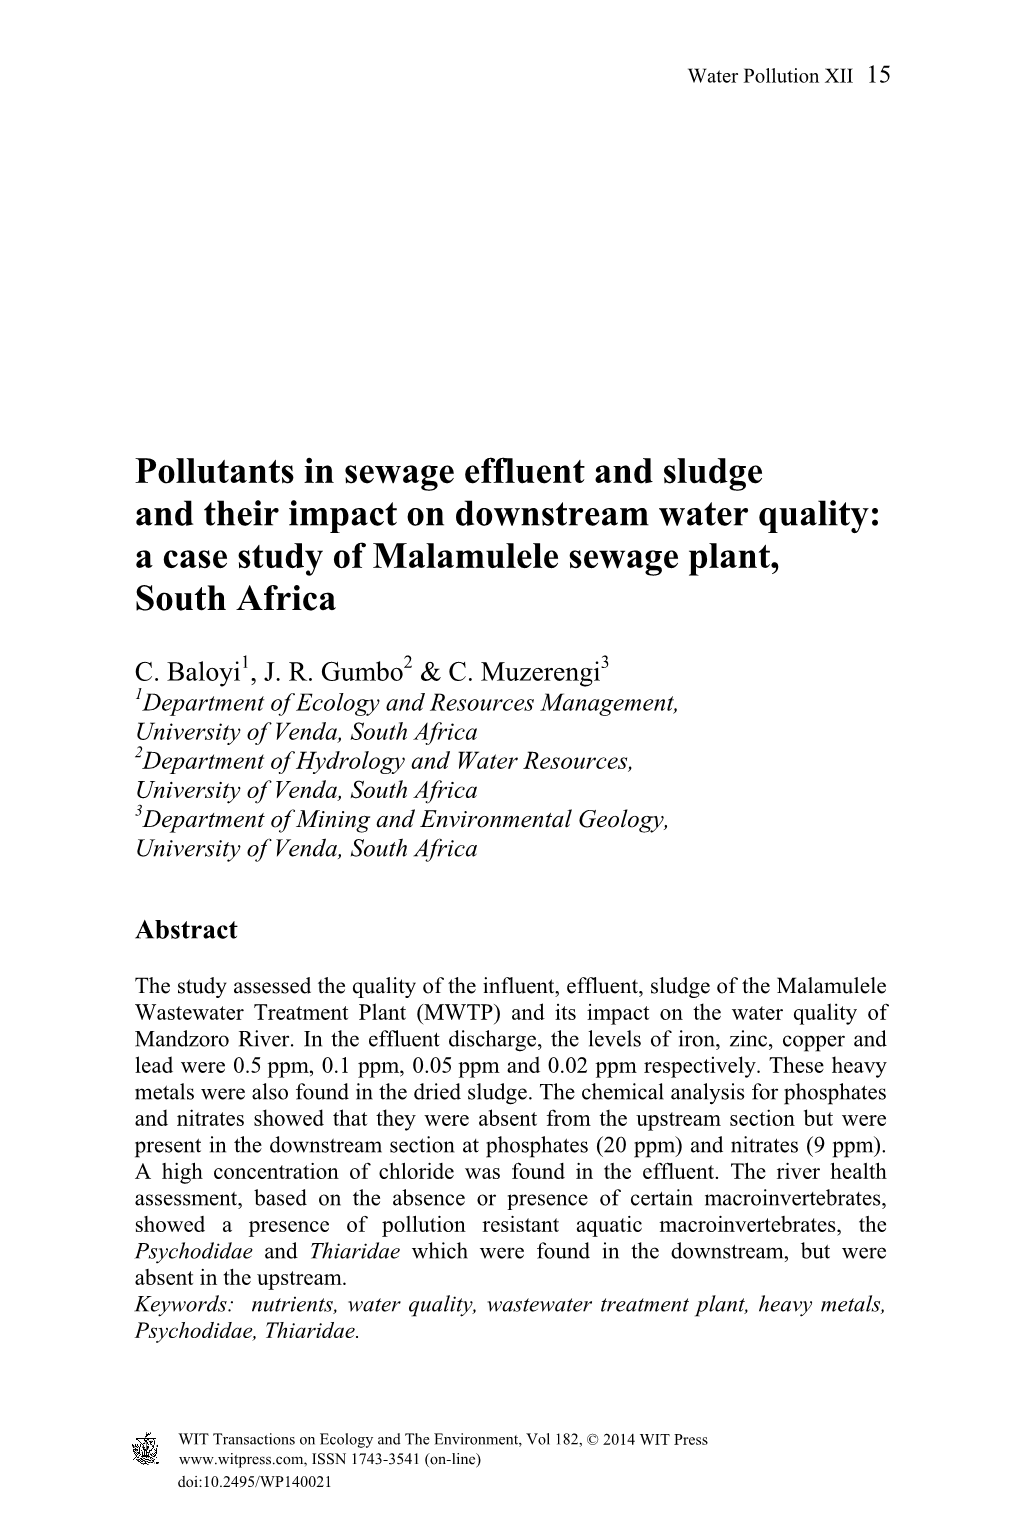 A Case Study of Malamulele Sewage Plant, South Africa